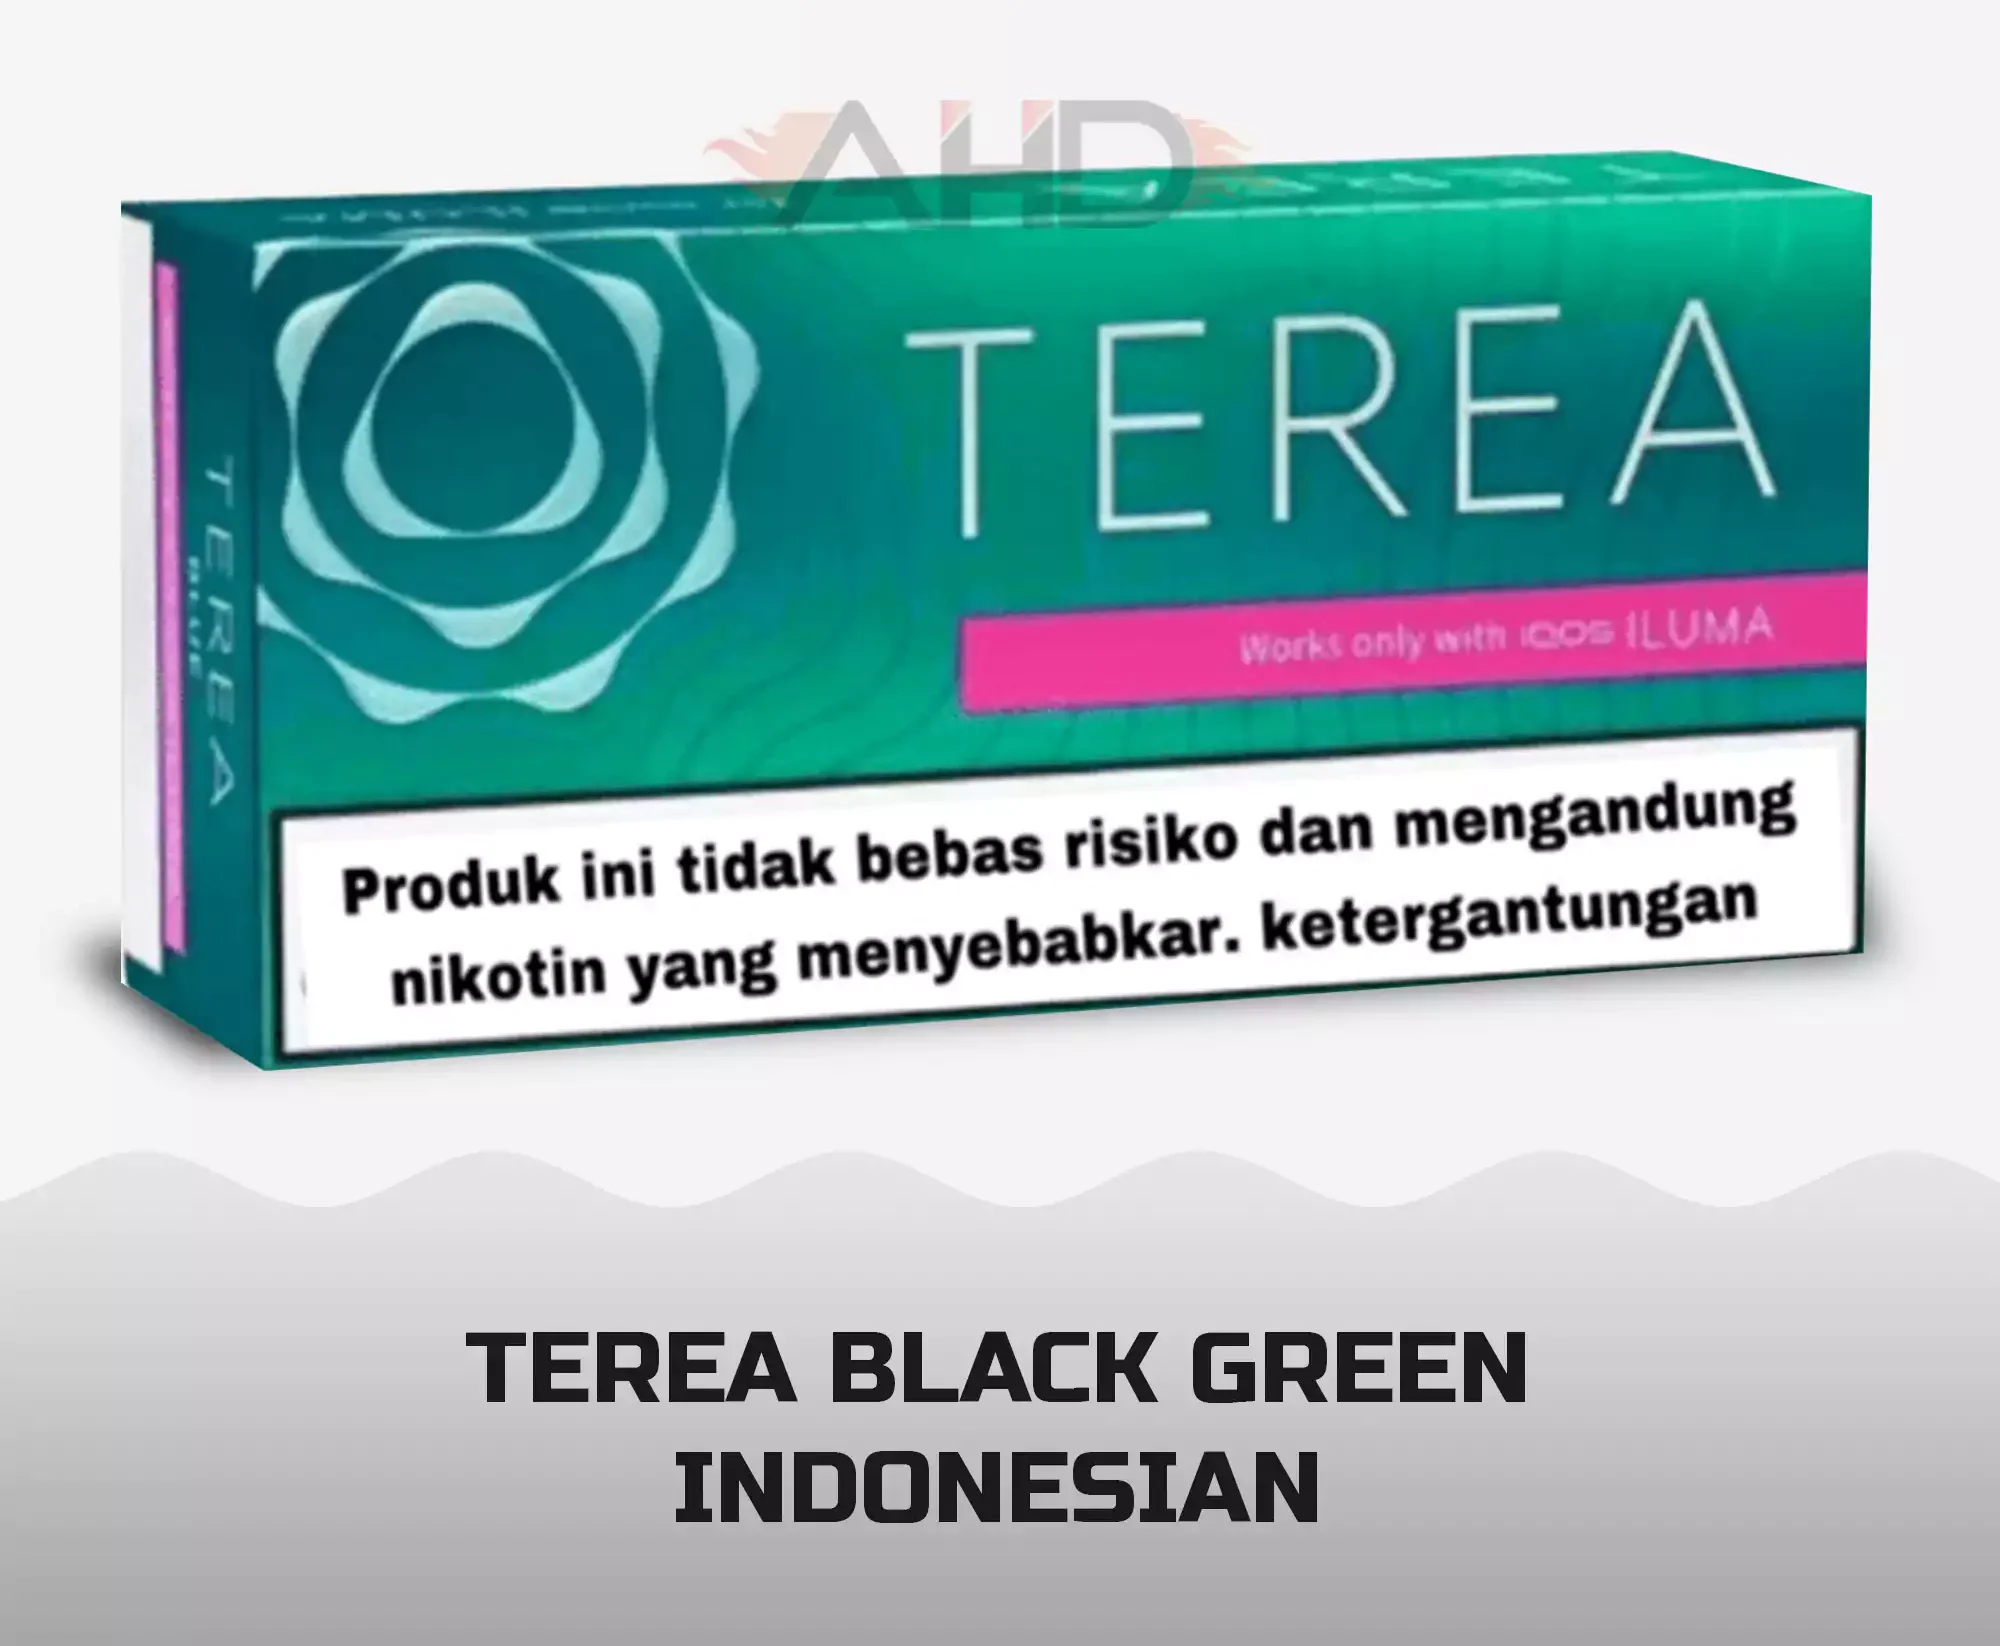 IQOS TEREA BLACK GREEN INDONESIAN in Oman